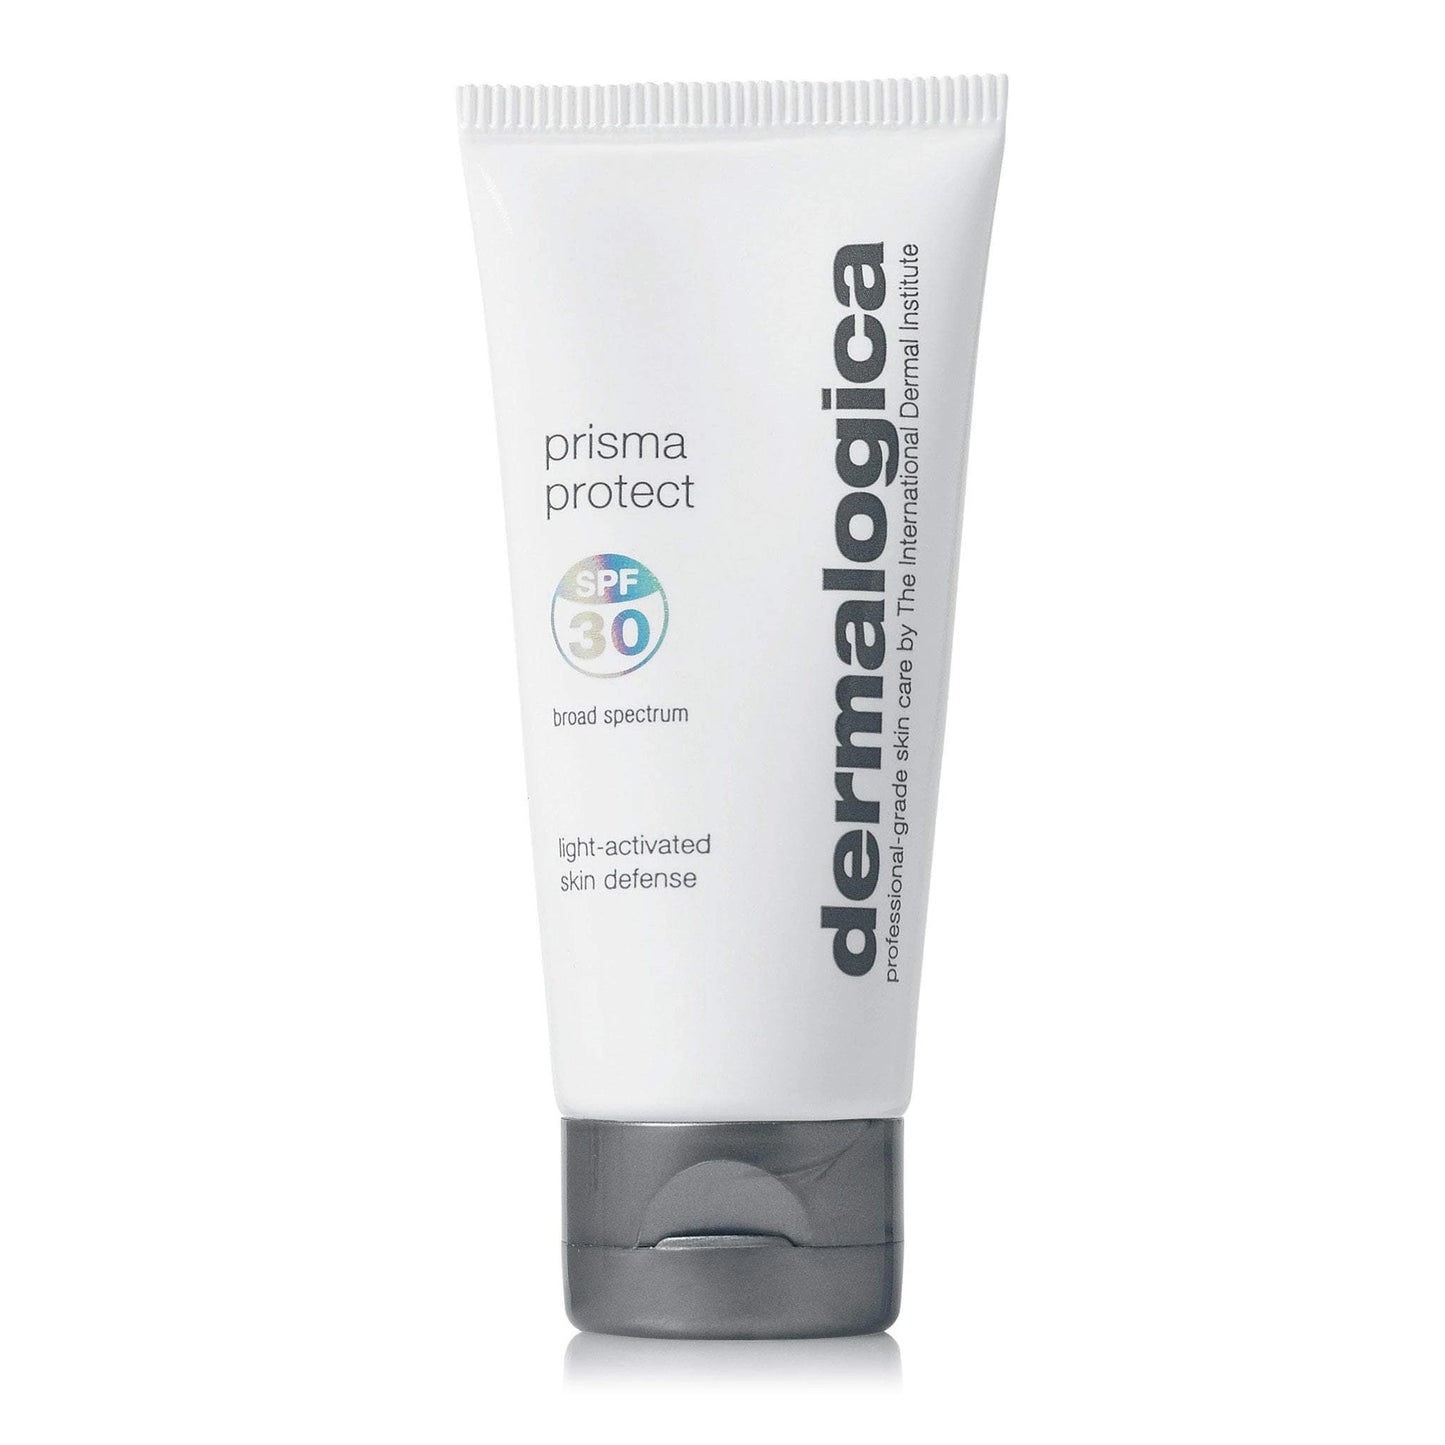 prisma protect spf 30 moisturizer